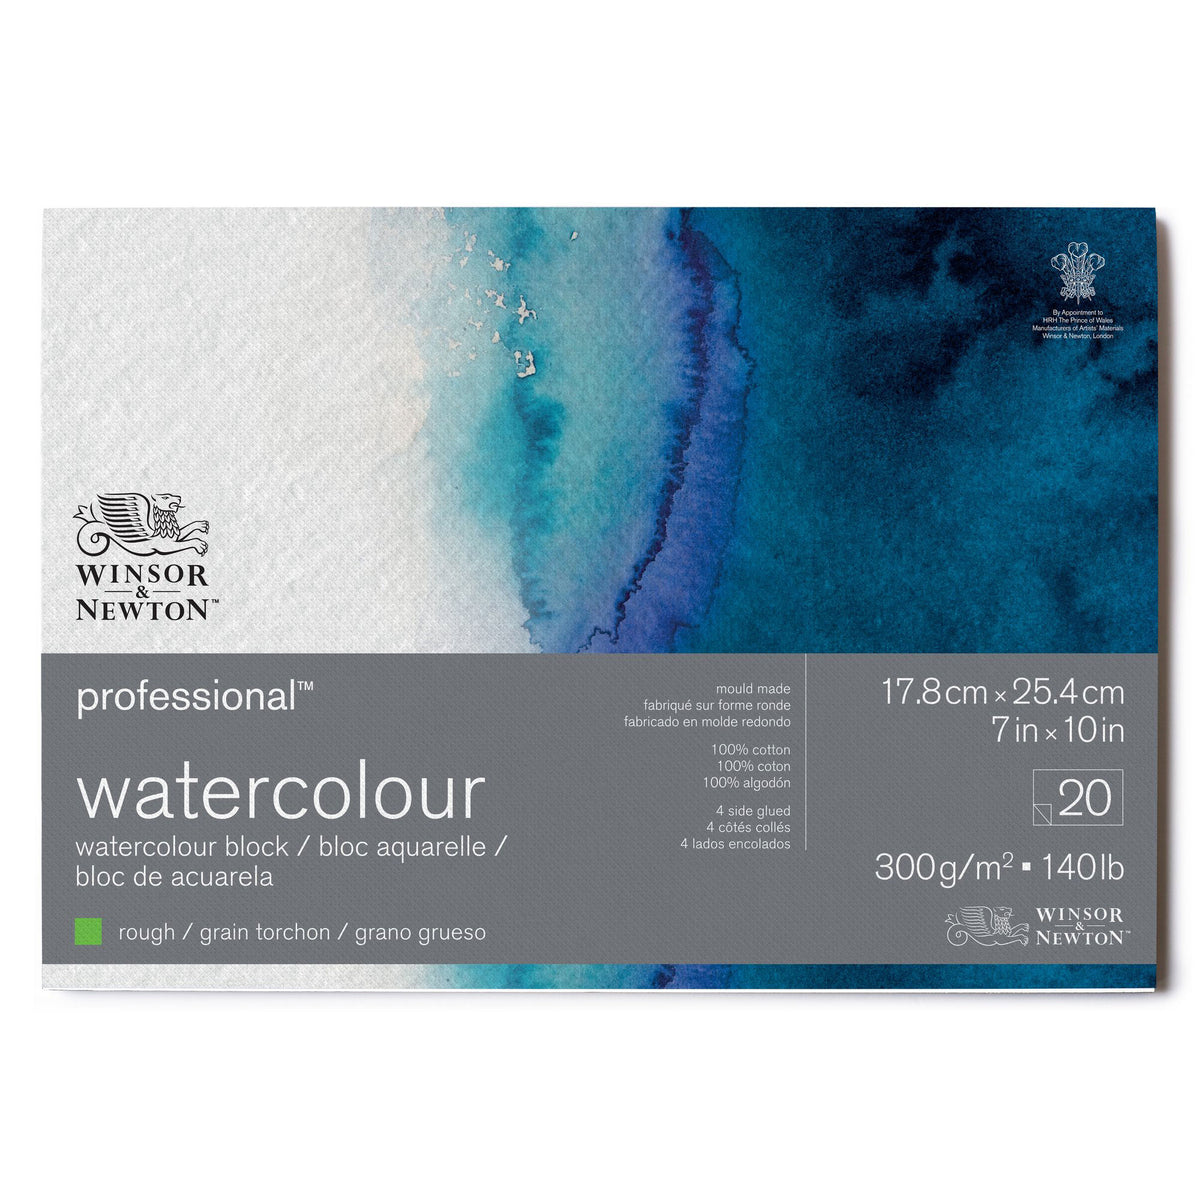 Winsor &amp; Newton Professional Watercolour Block 300gsm/ 140Ib 20 Sheets - Rough